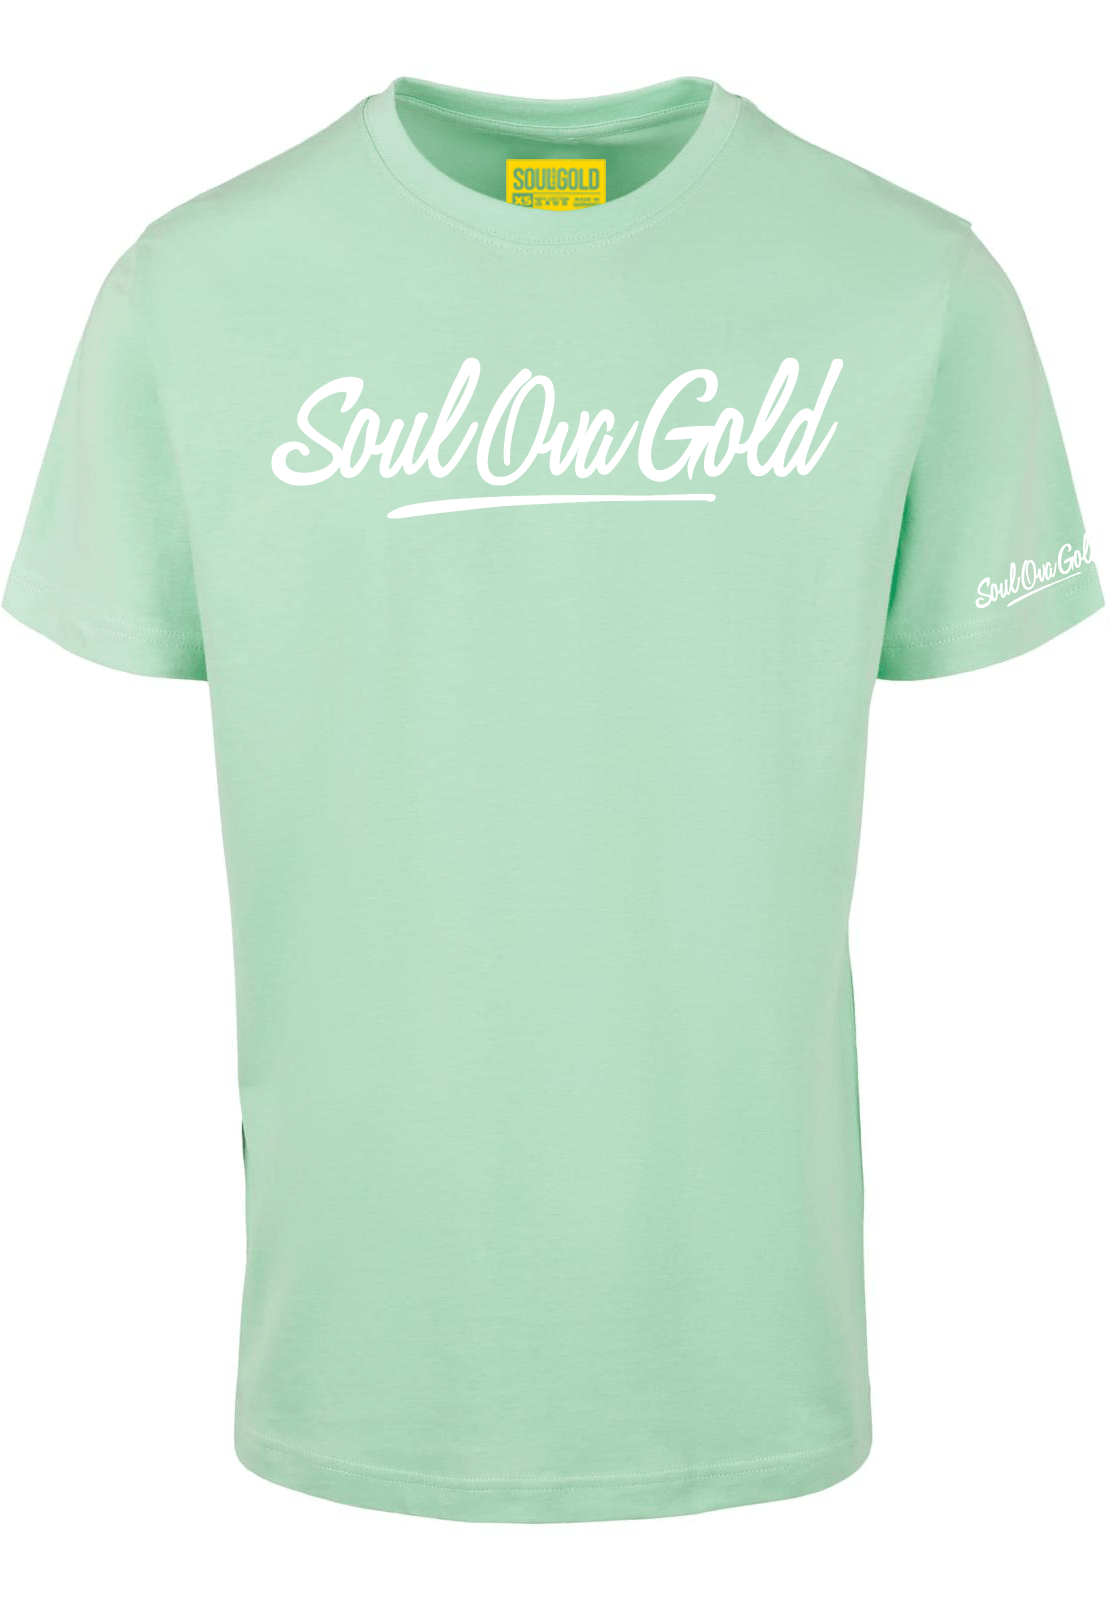 Soul Ova Gold Men's Tees Stick 2 The Script Classic fit T-Shirt (Neo Mint)